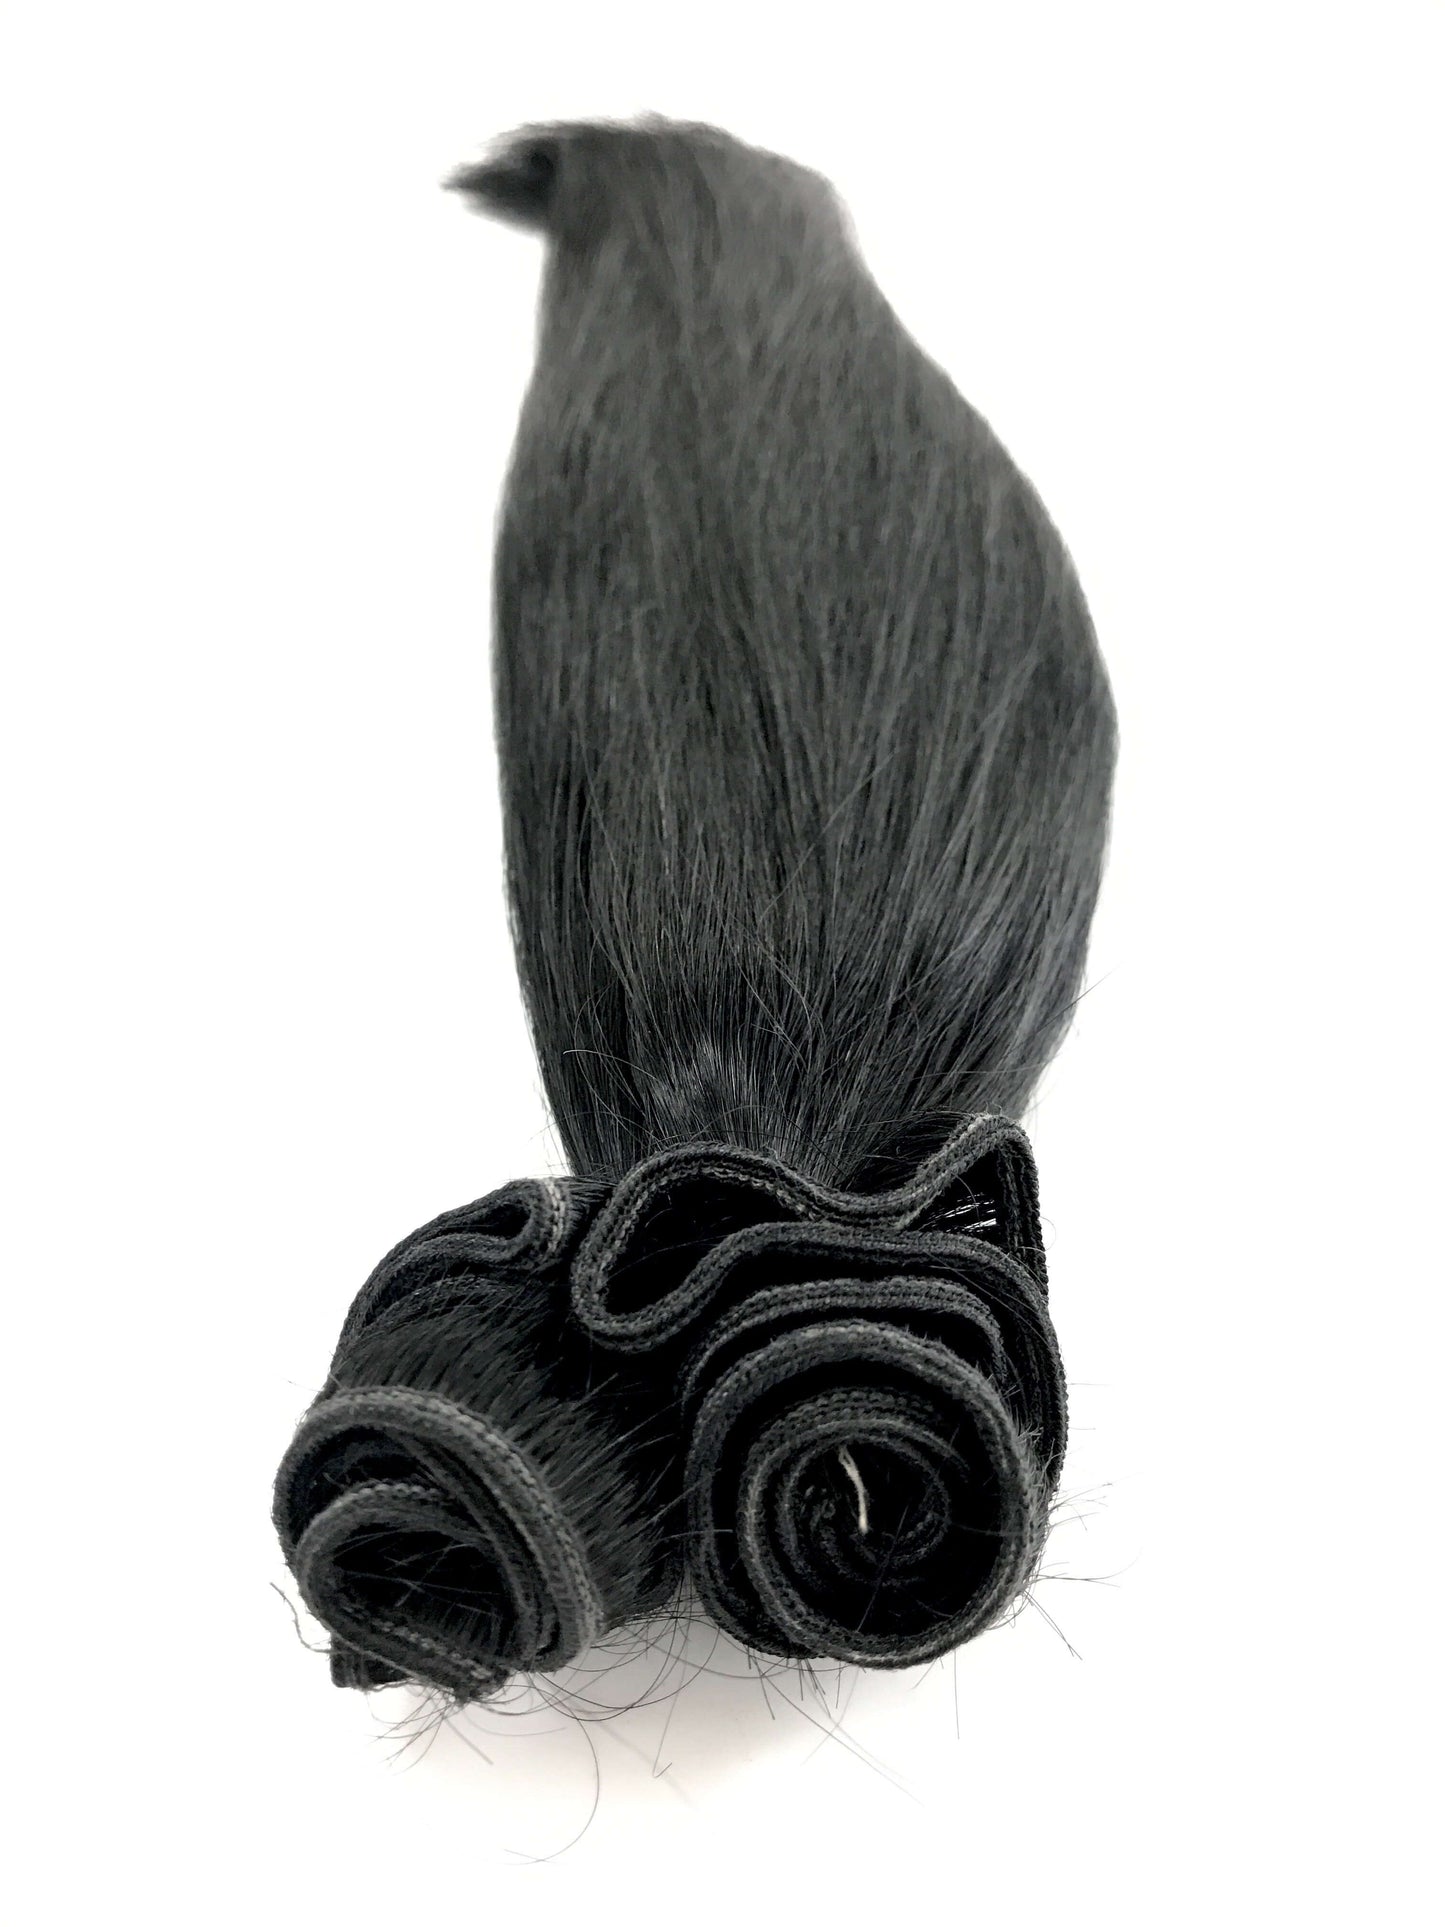 Brasiliansk virgin remy människohår - inslag, 20'', rak, färg svart, 100 g, snabb leverans